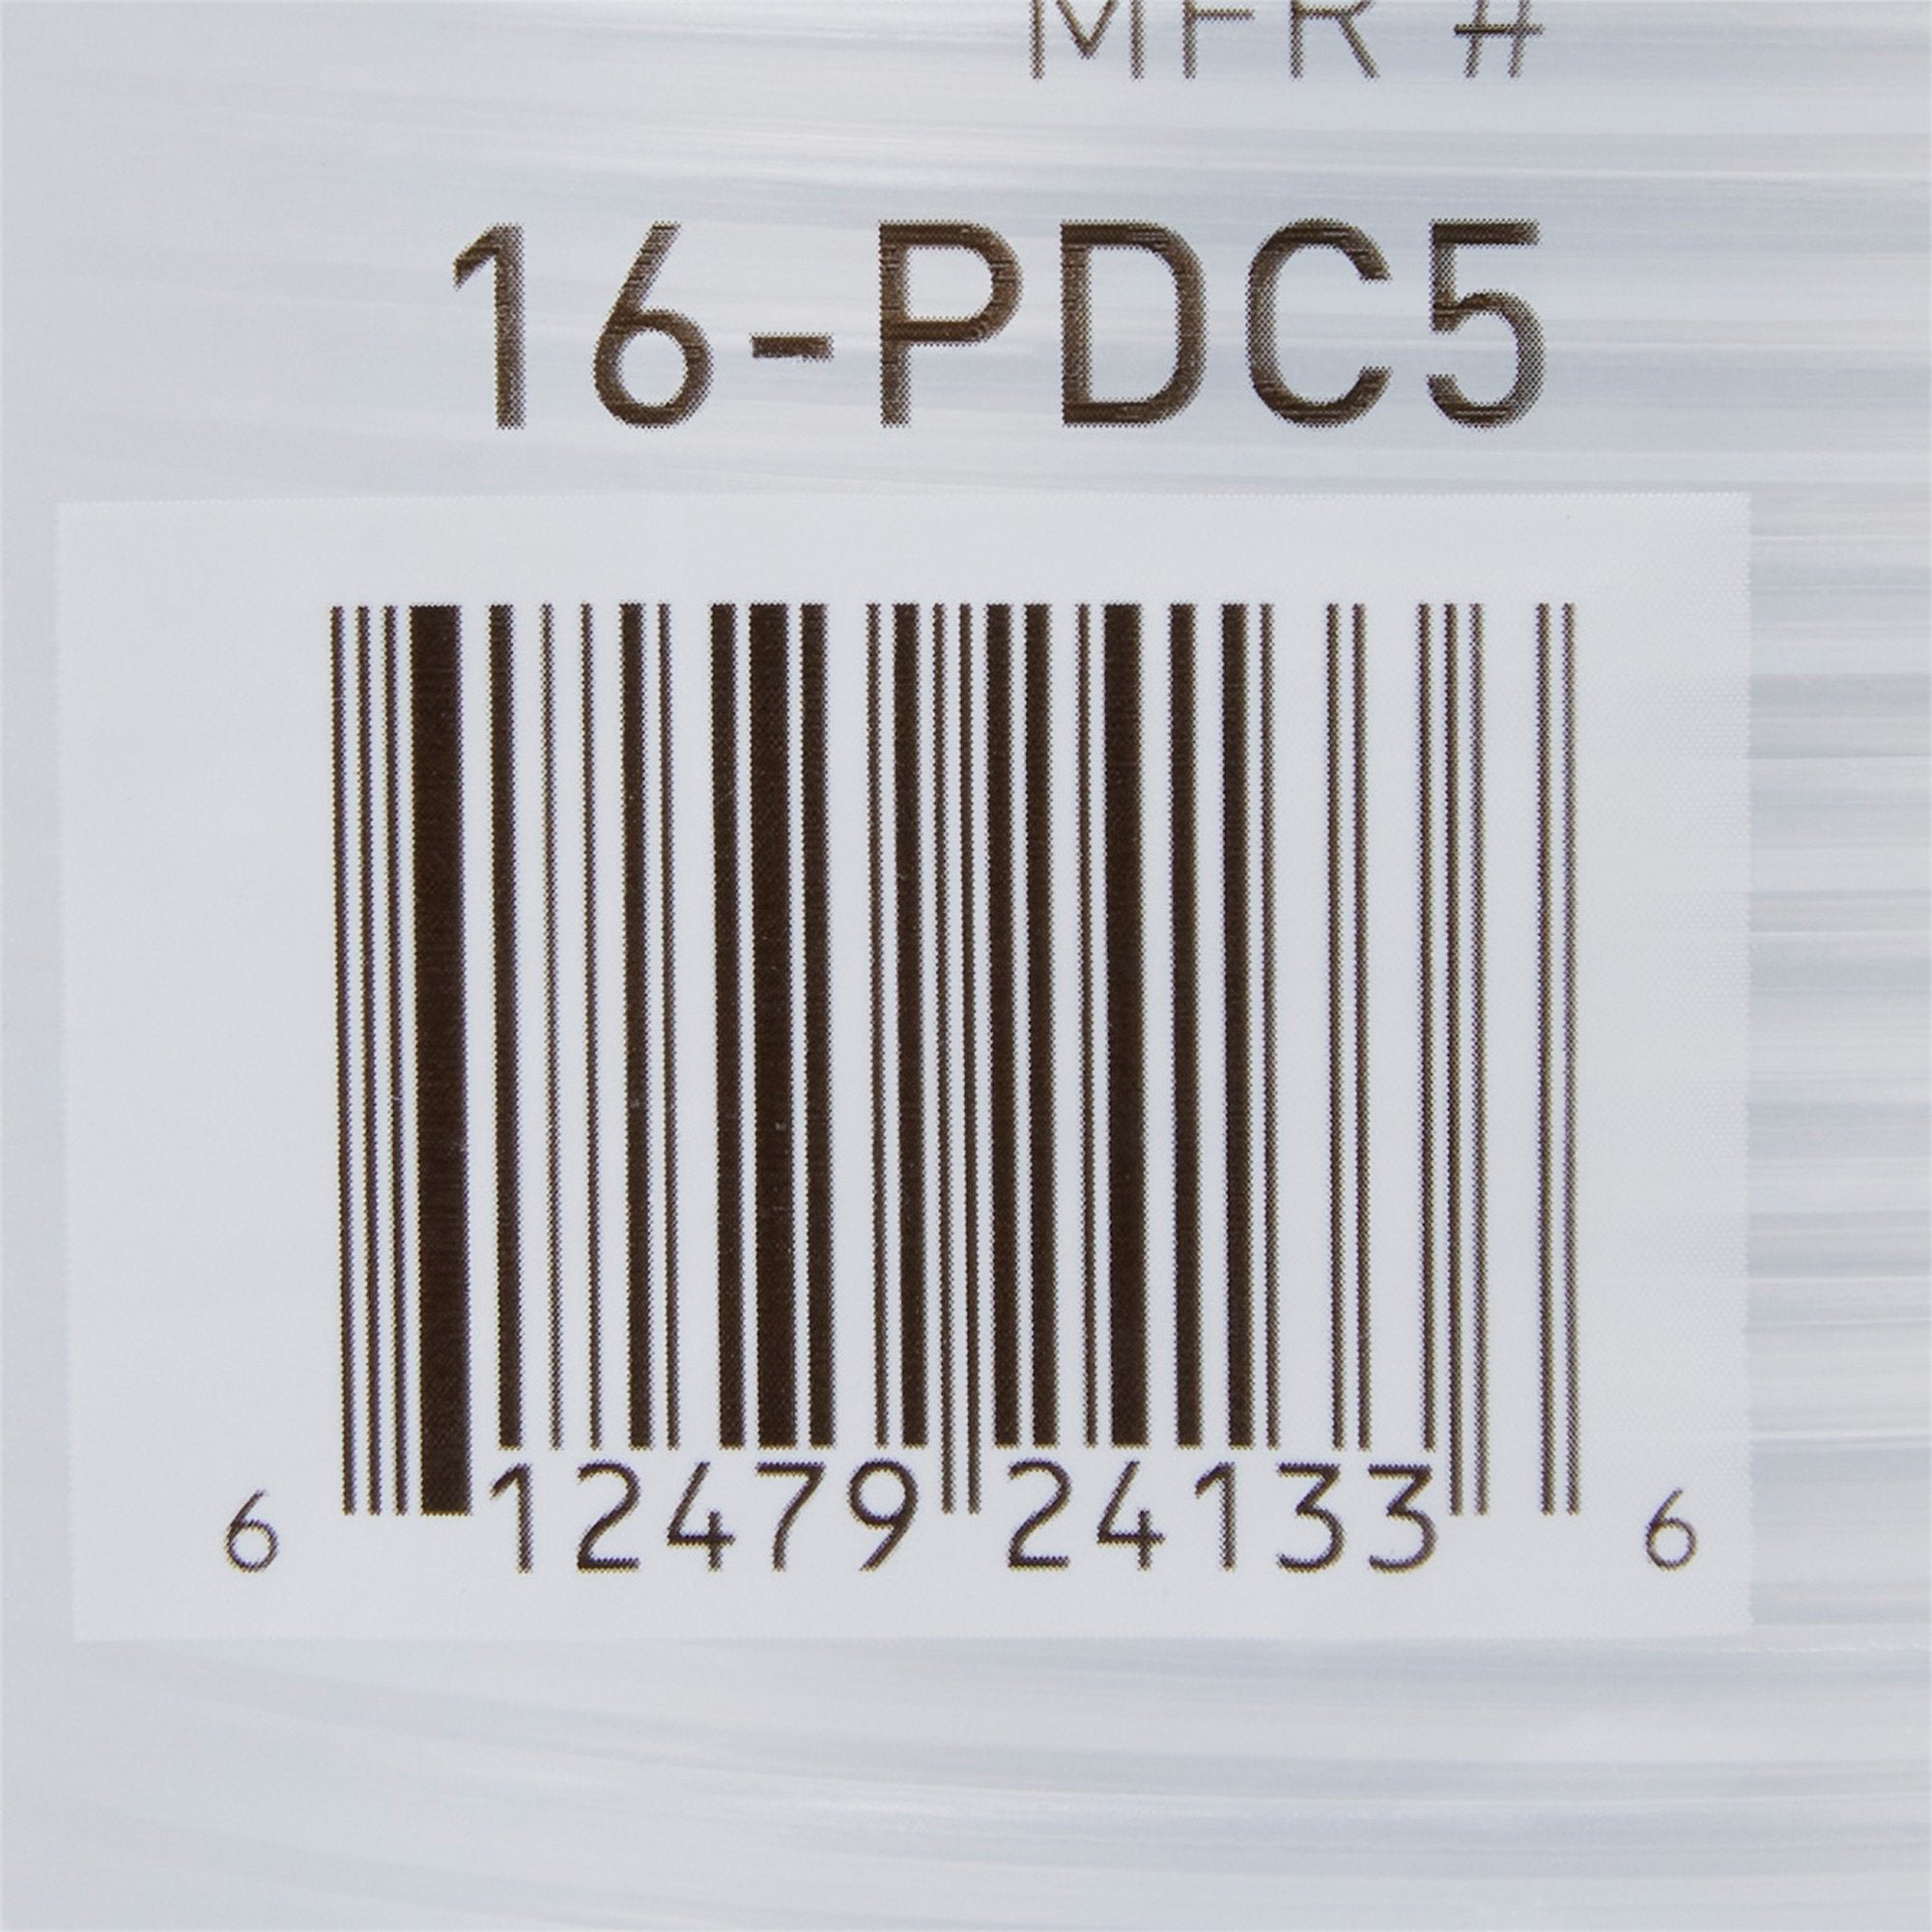 McKesson Clear Polypropylene Drinking Cups, 5 oz - 100 Pack for Beverages & Medication